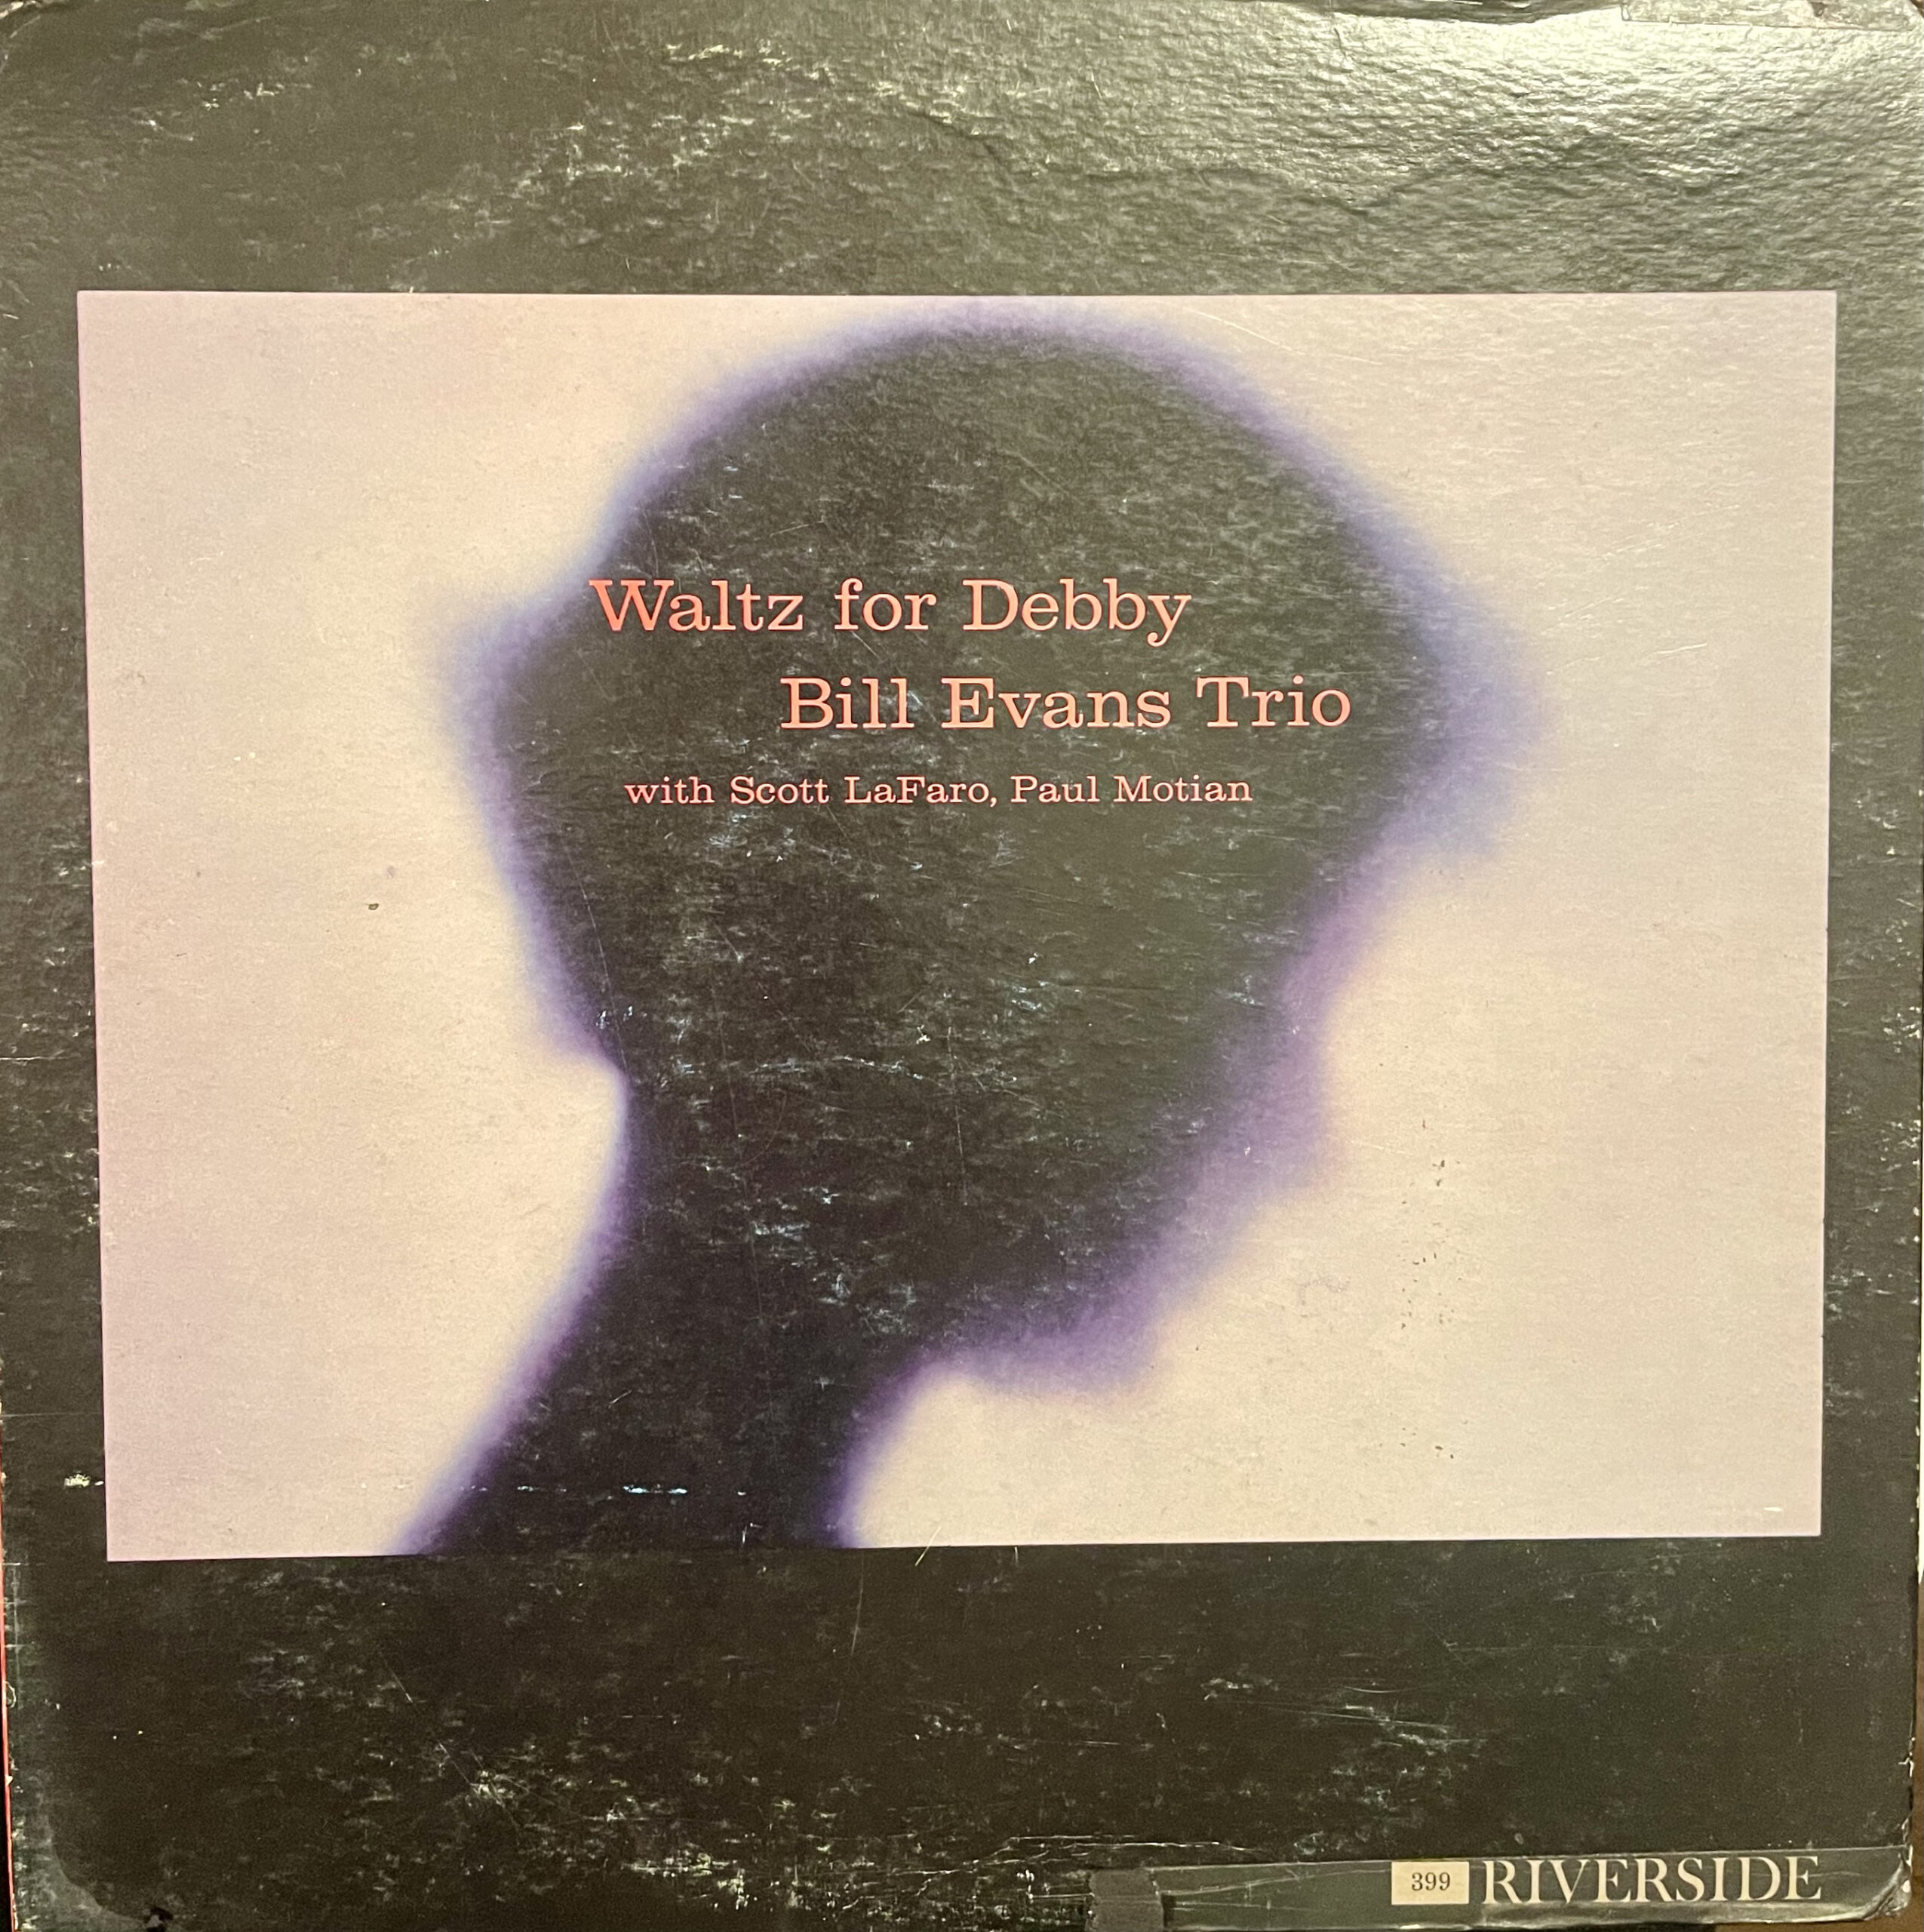 Bill Evans Trio「Waltz For Debby」レコード vs. SACD比較